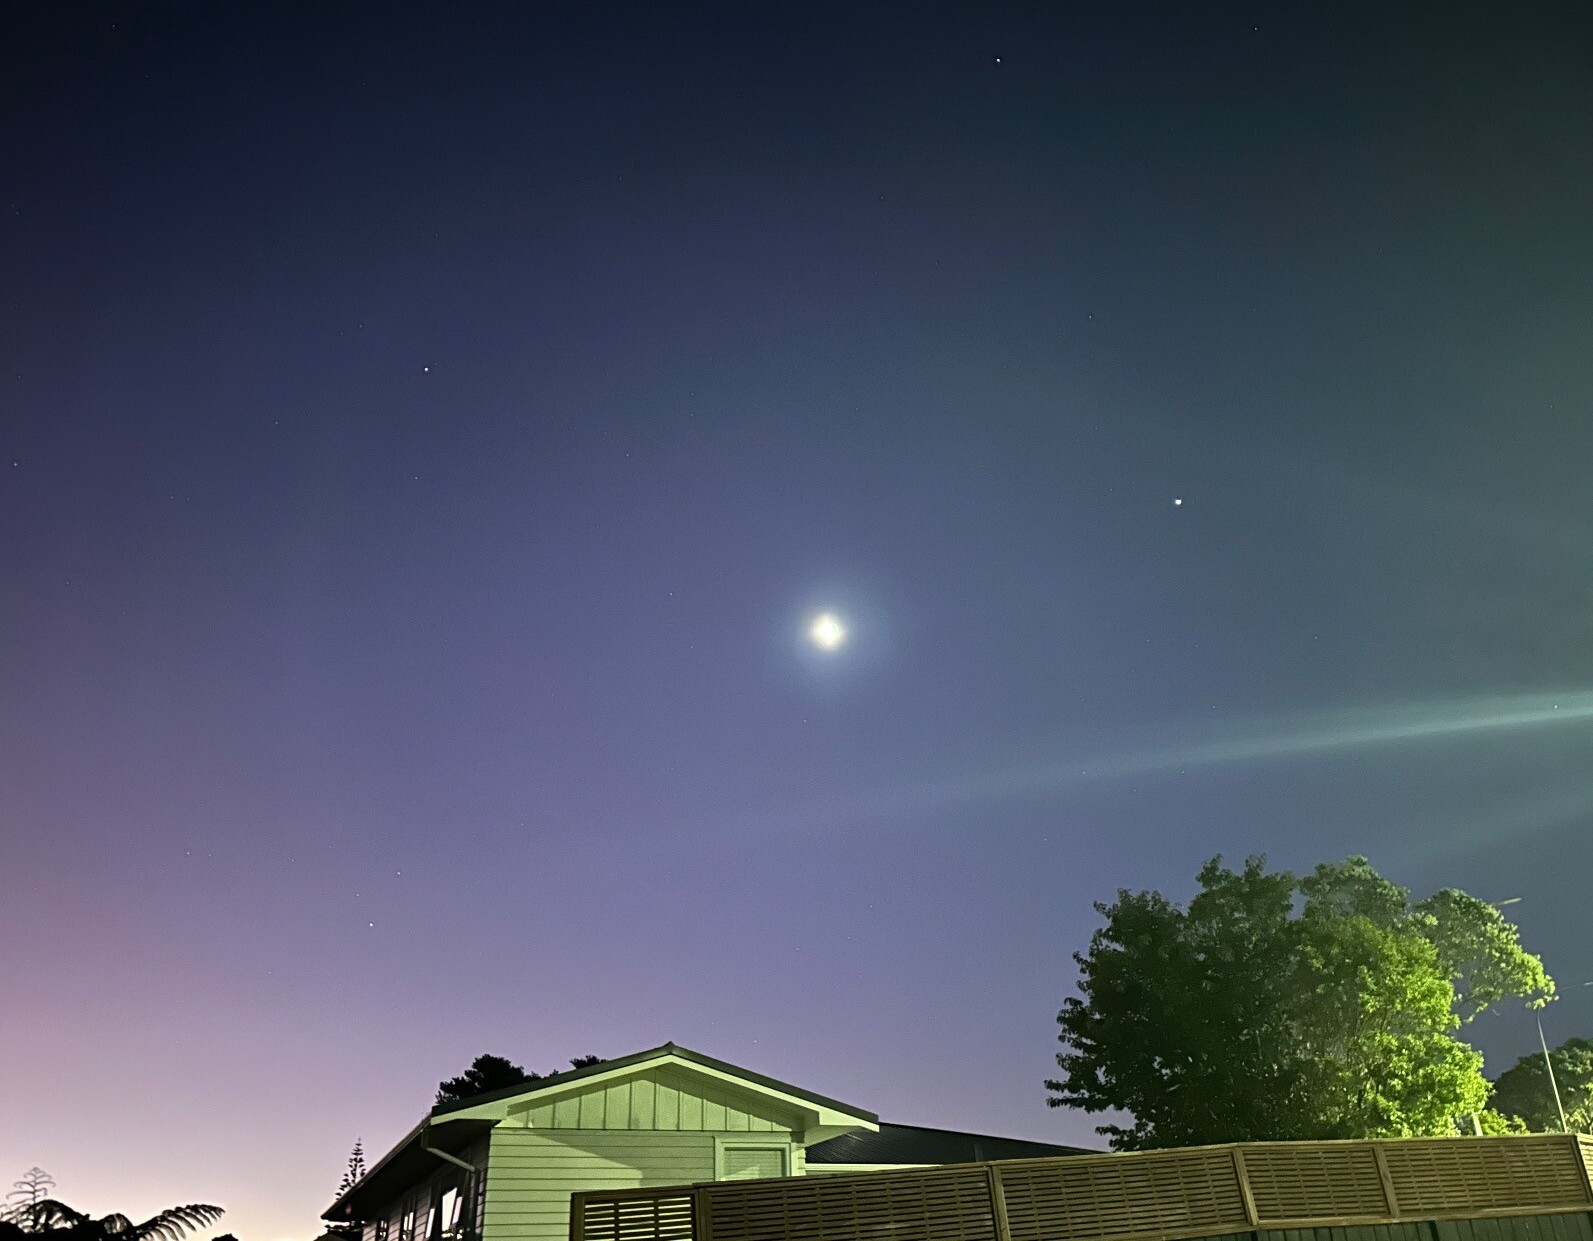  Jupiter in the night's sky over New Zealand, Dec 22